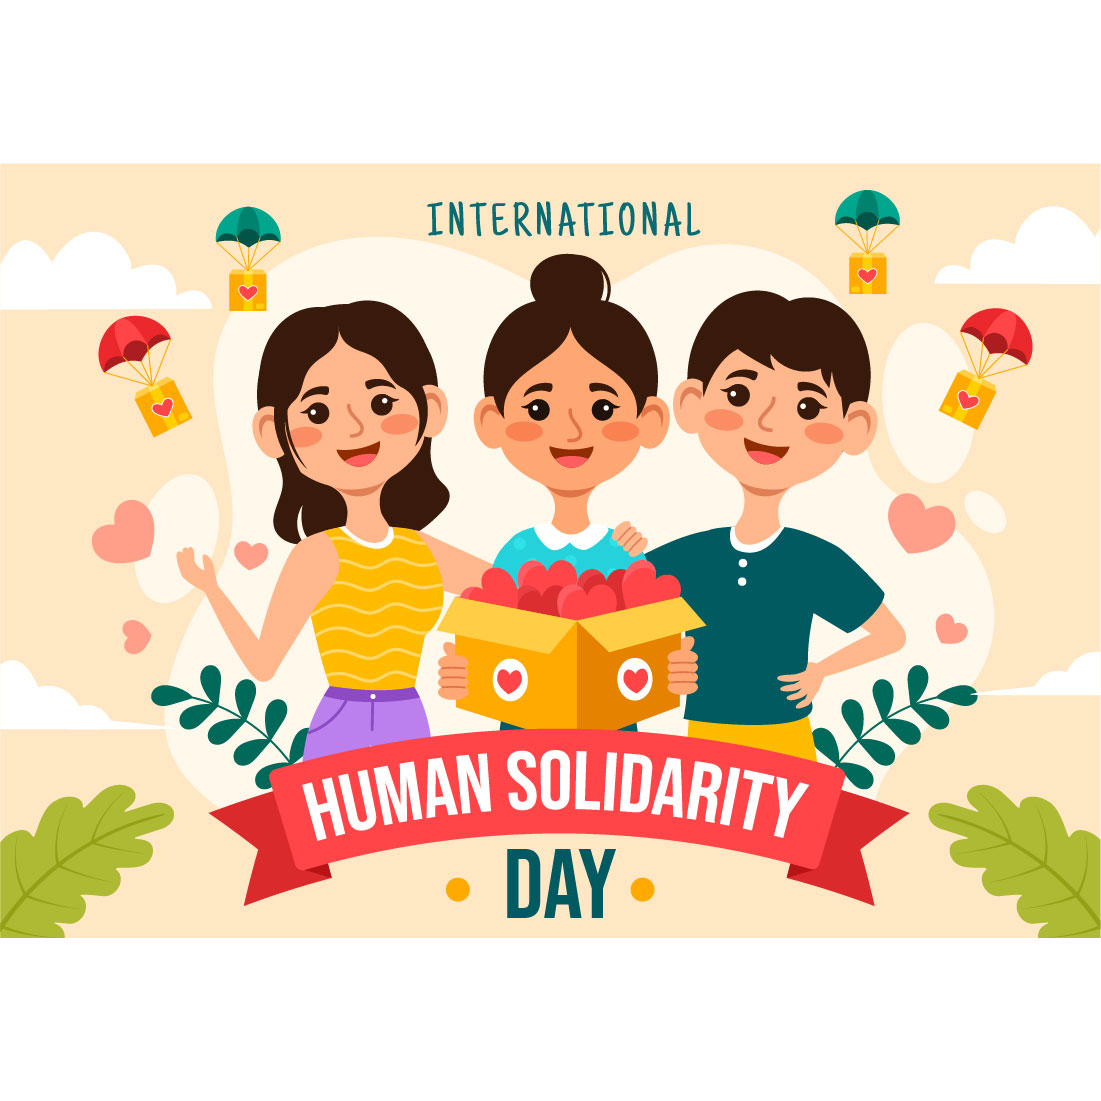 13 International Human Solidarity Day Illustration preview image.